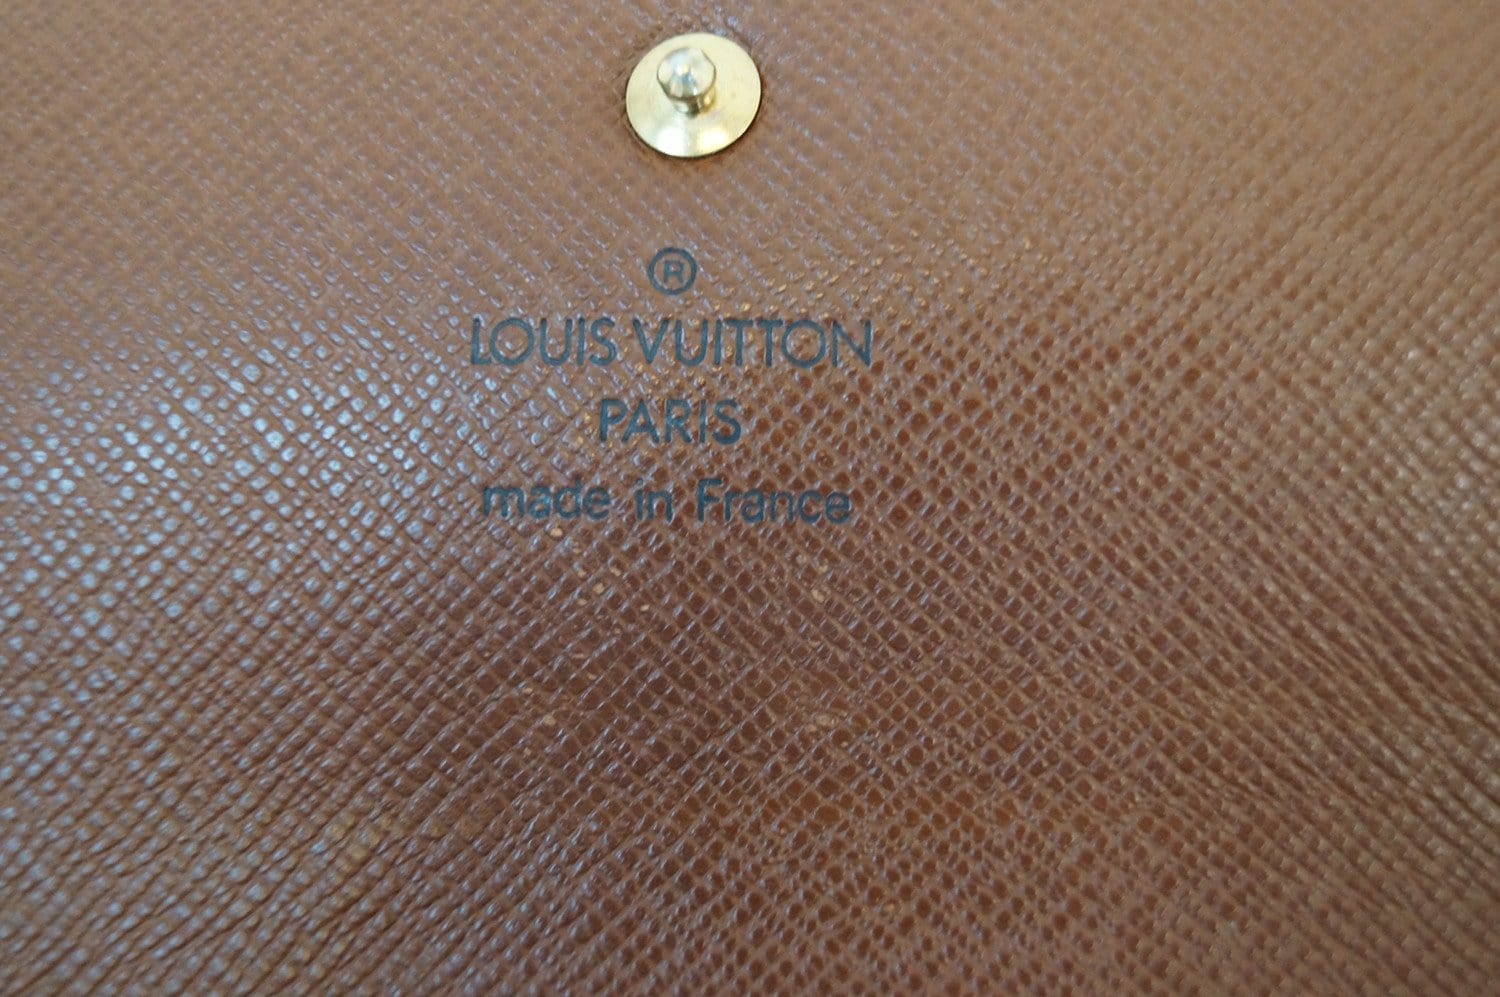 Louis Vuitton Retiro Sarah Wallet in Monogram Coated Canvas — Otra